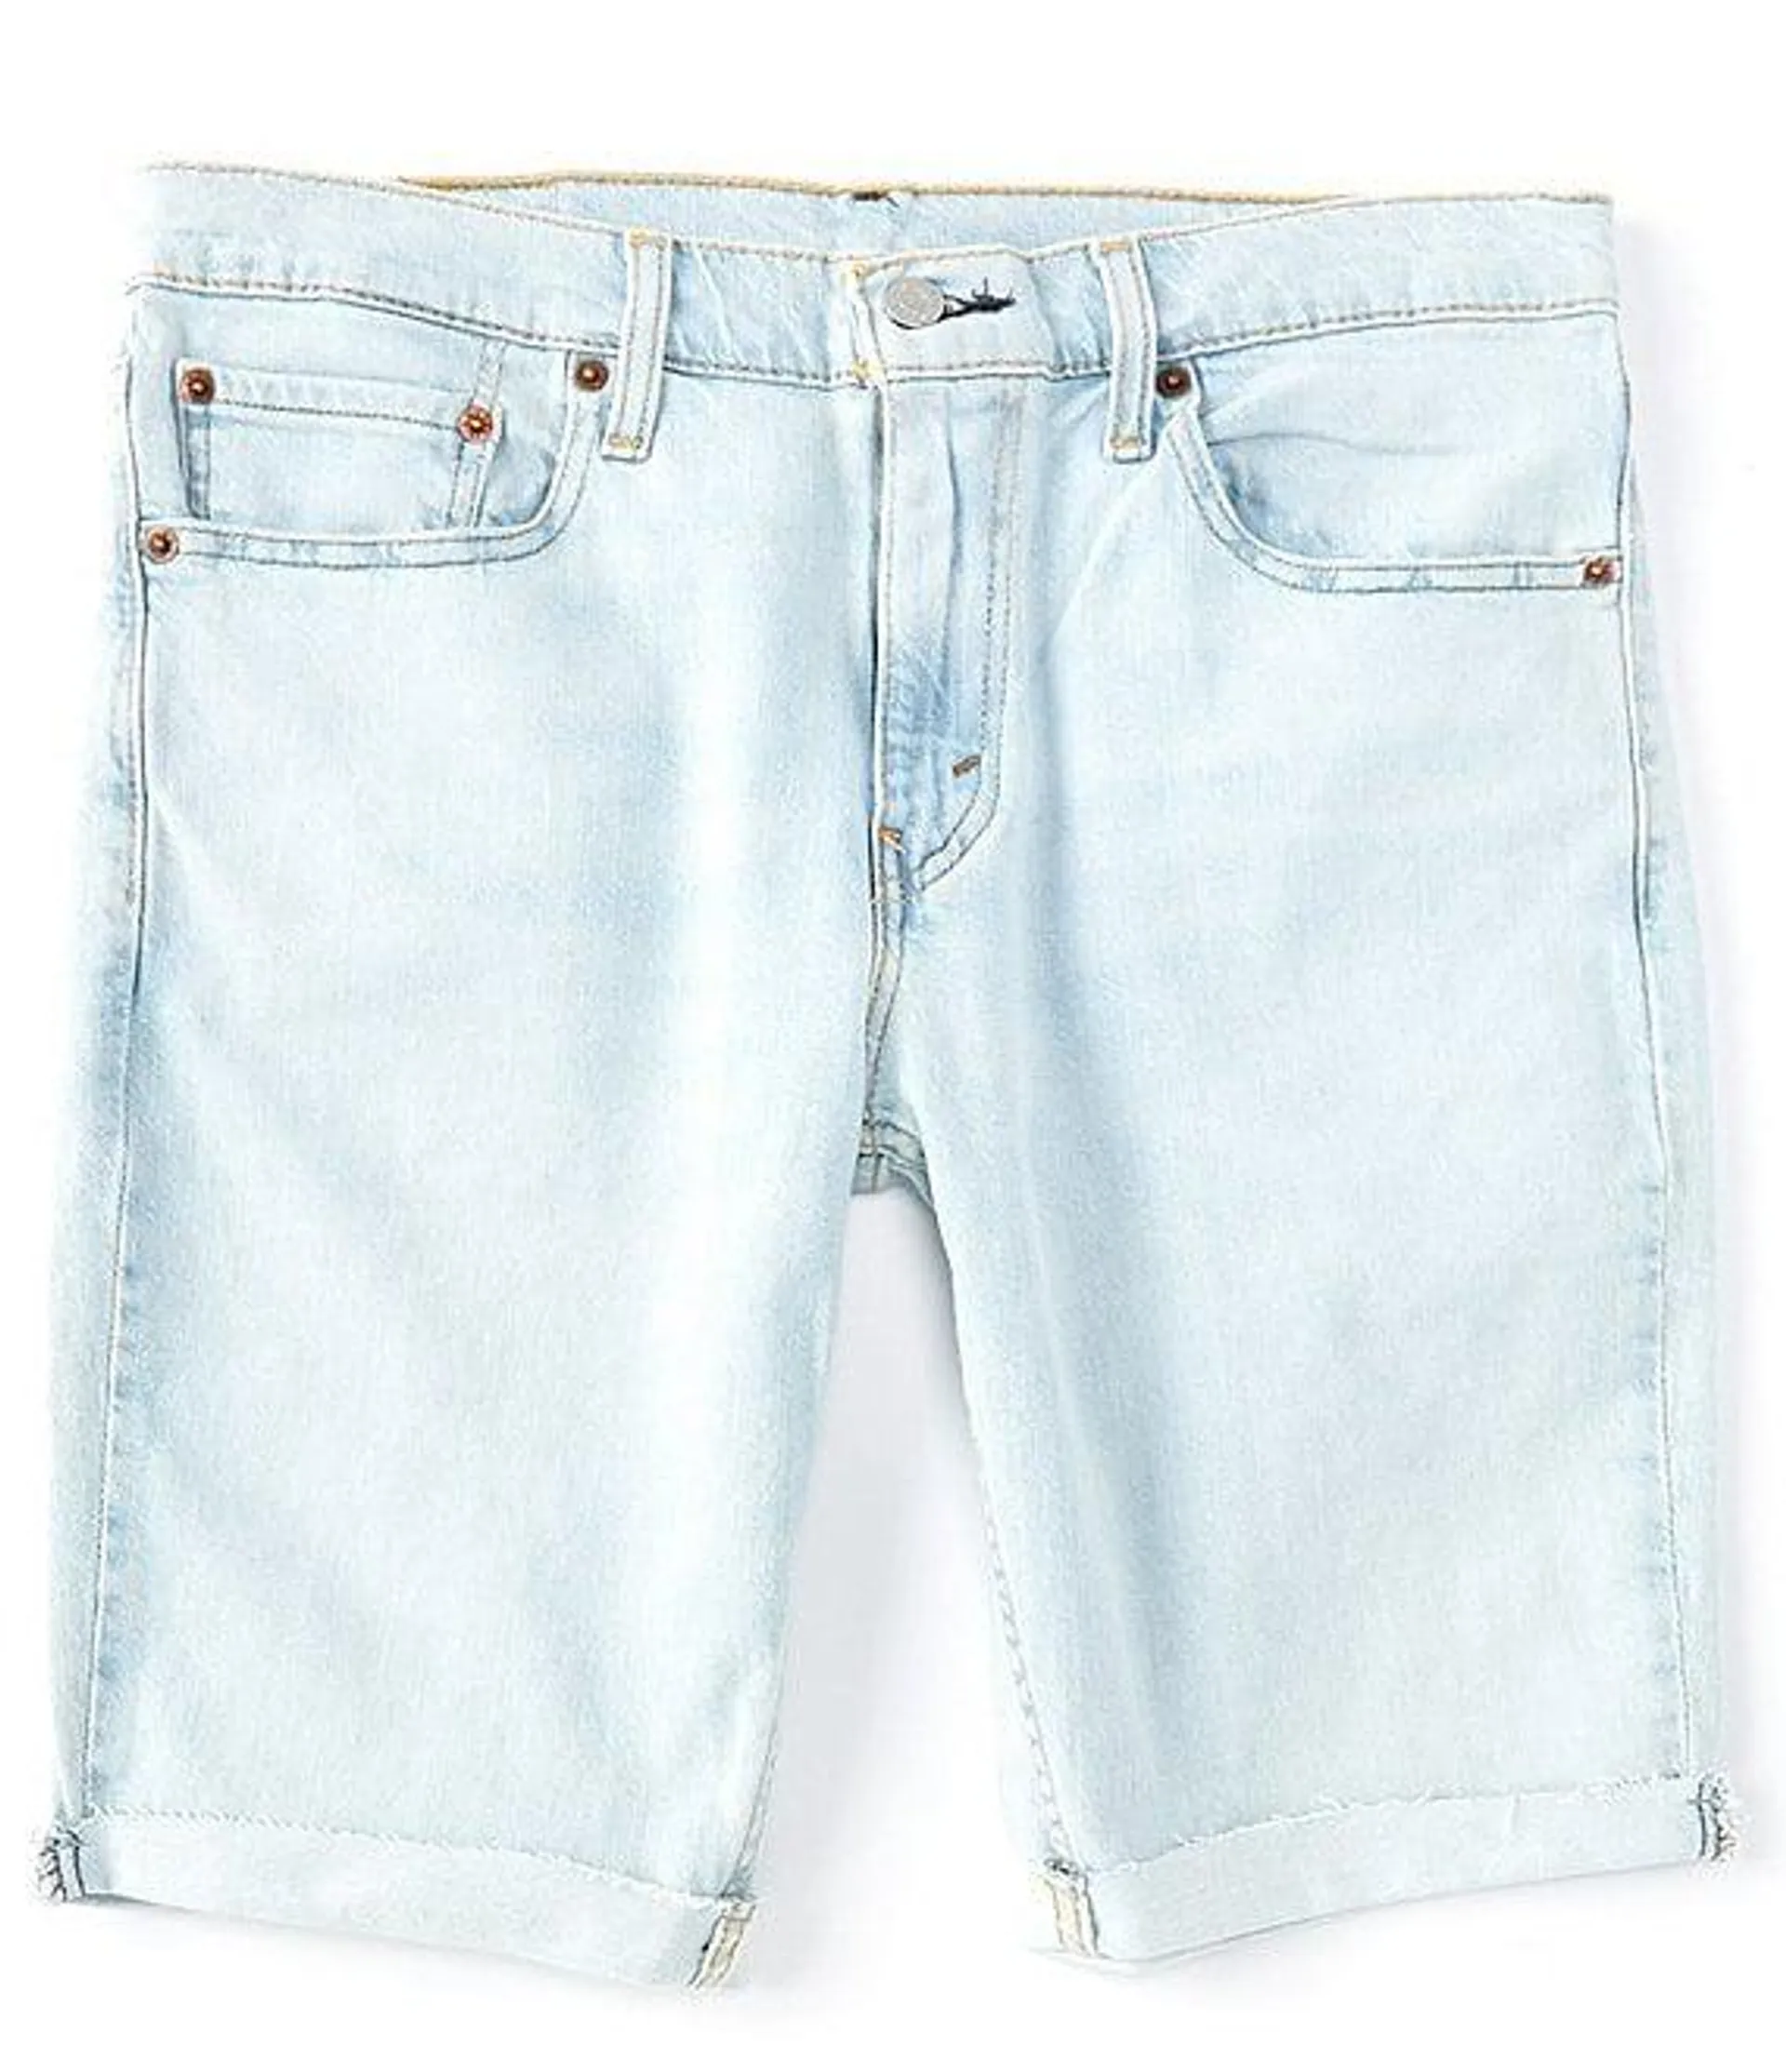 Levi's® 511 Slim Fit Cut Off 12" Inseam Jean Shorts